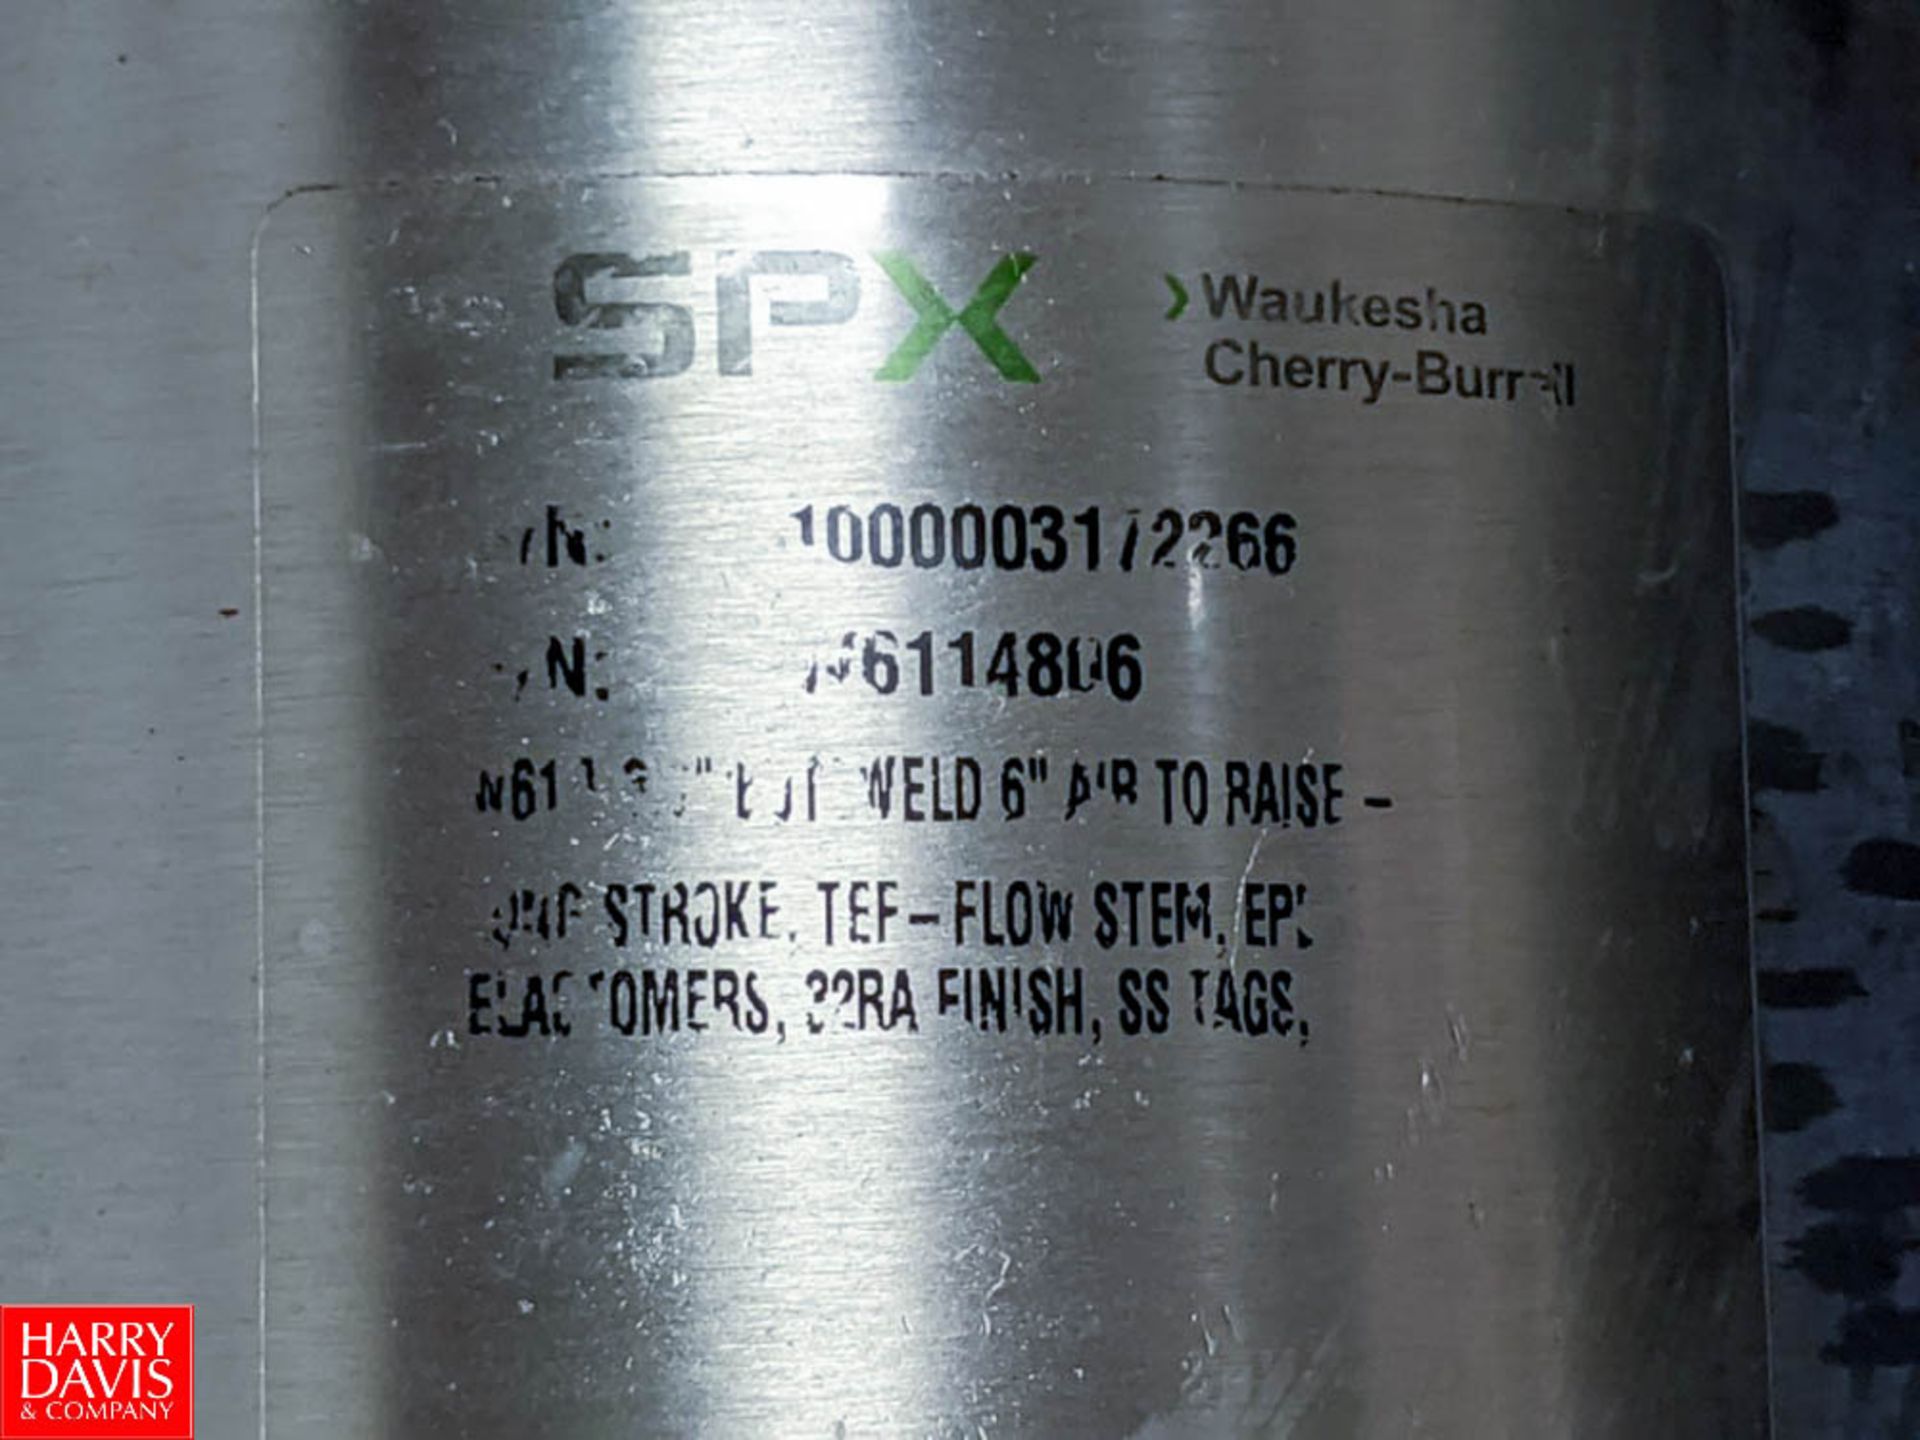 SPX Waukesha Cherry Burrell 3" S/S Air Valve Rigging Fee: $25 - Image 2 of 2